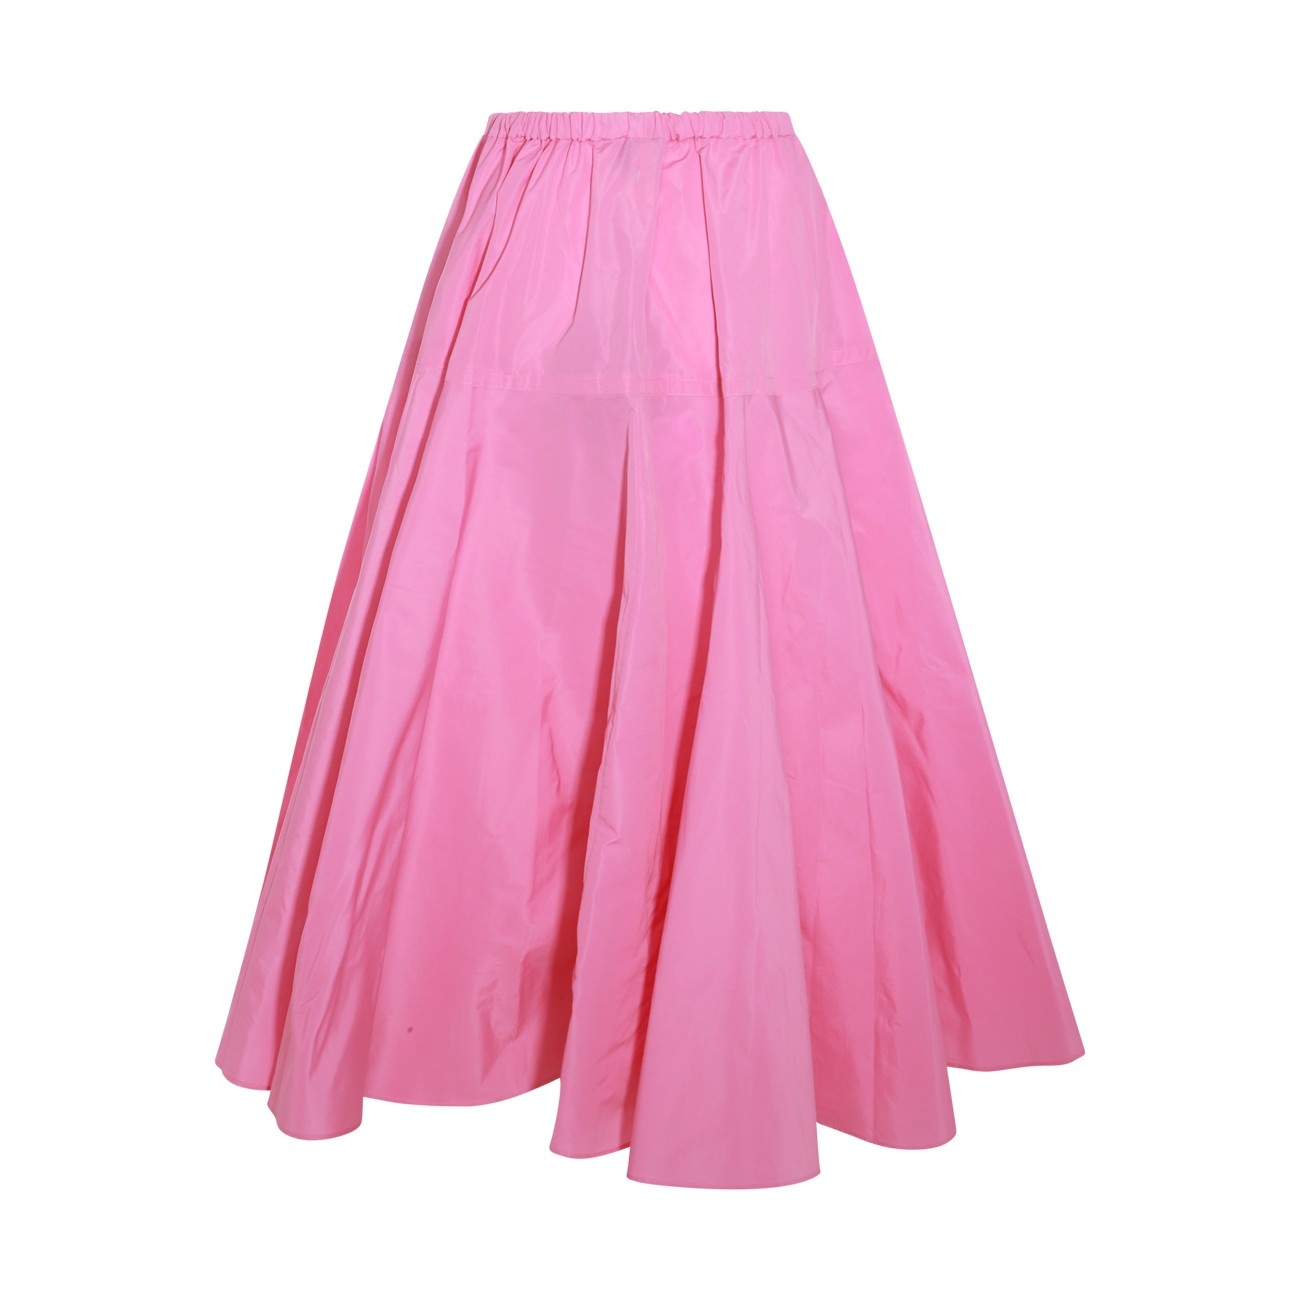 pink skirt - 2